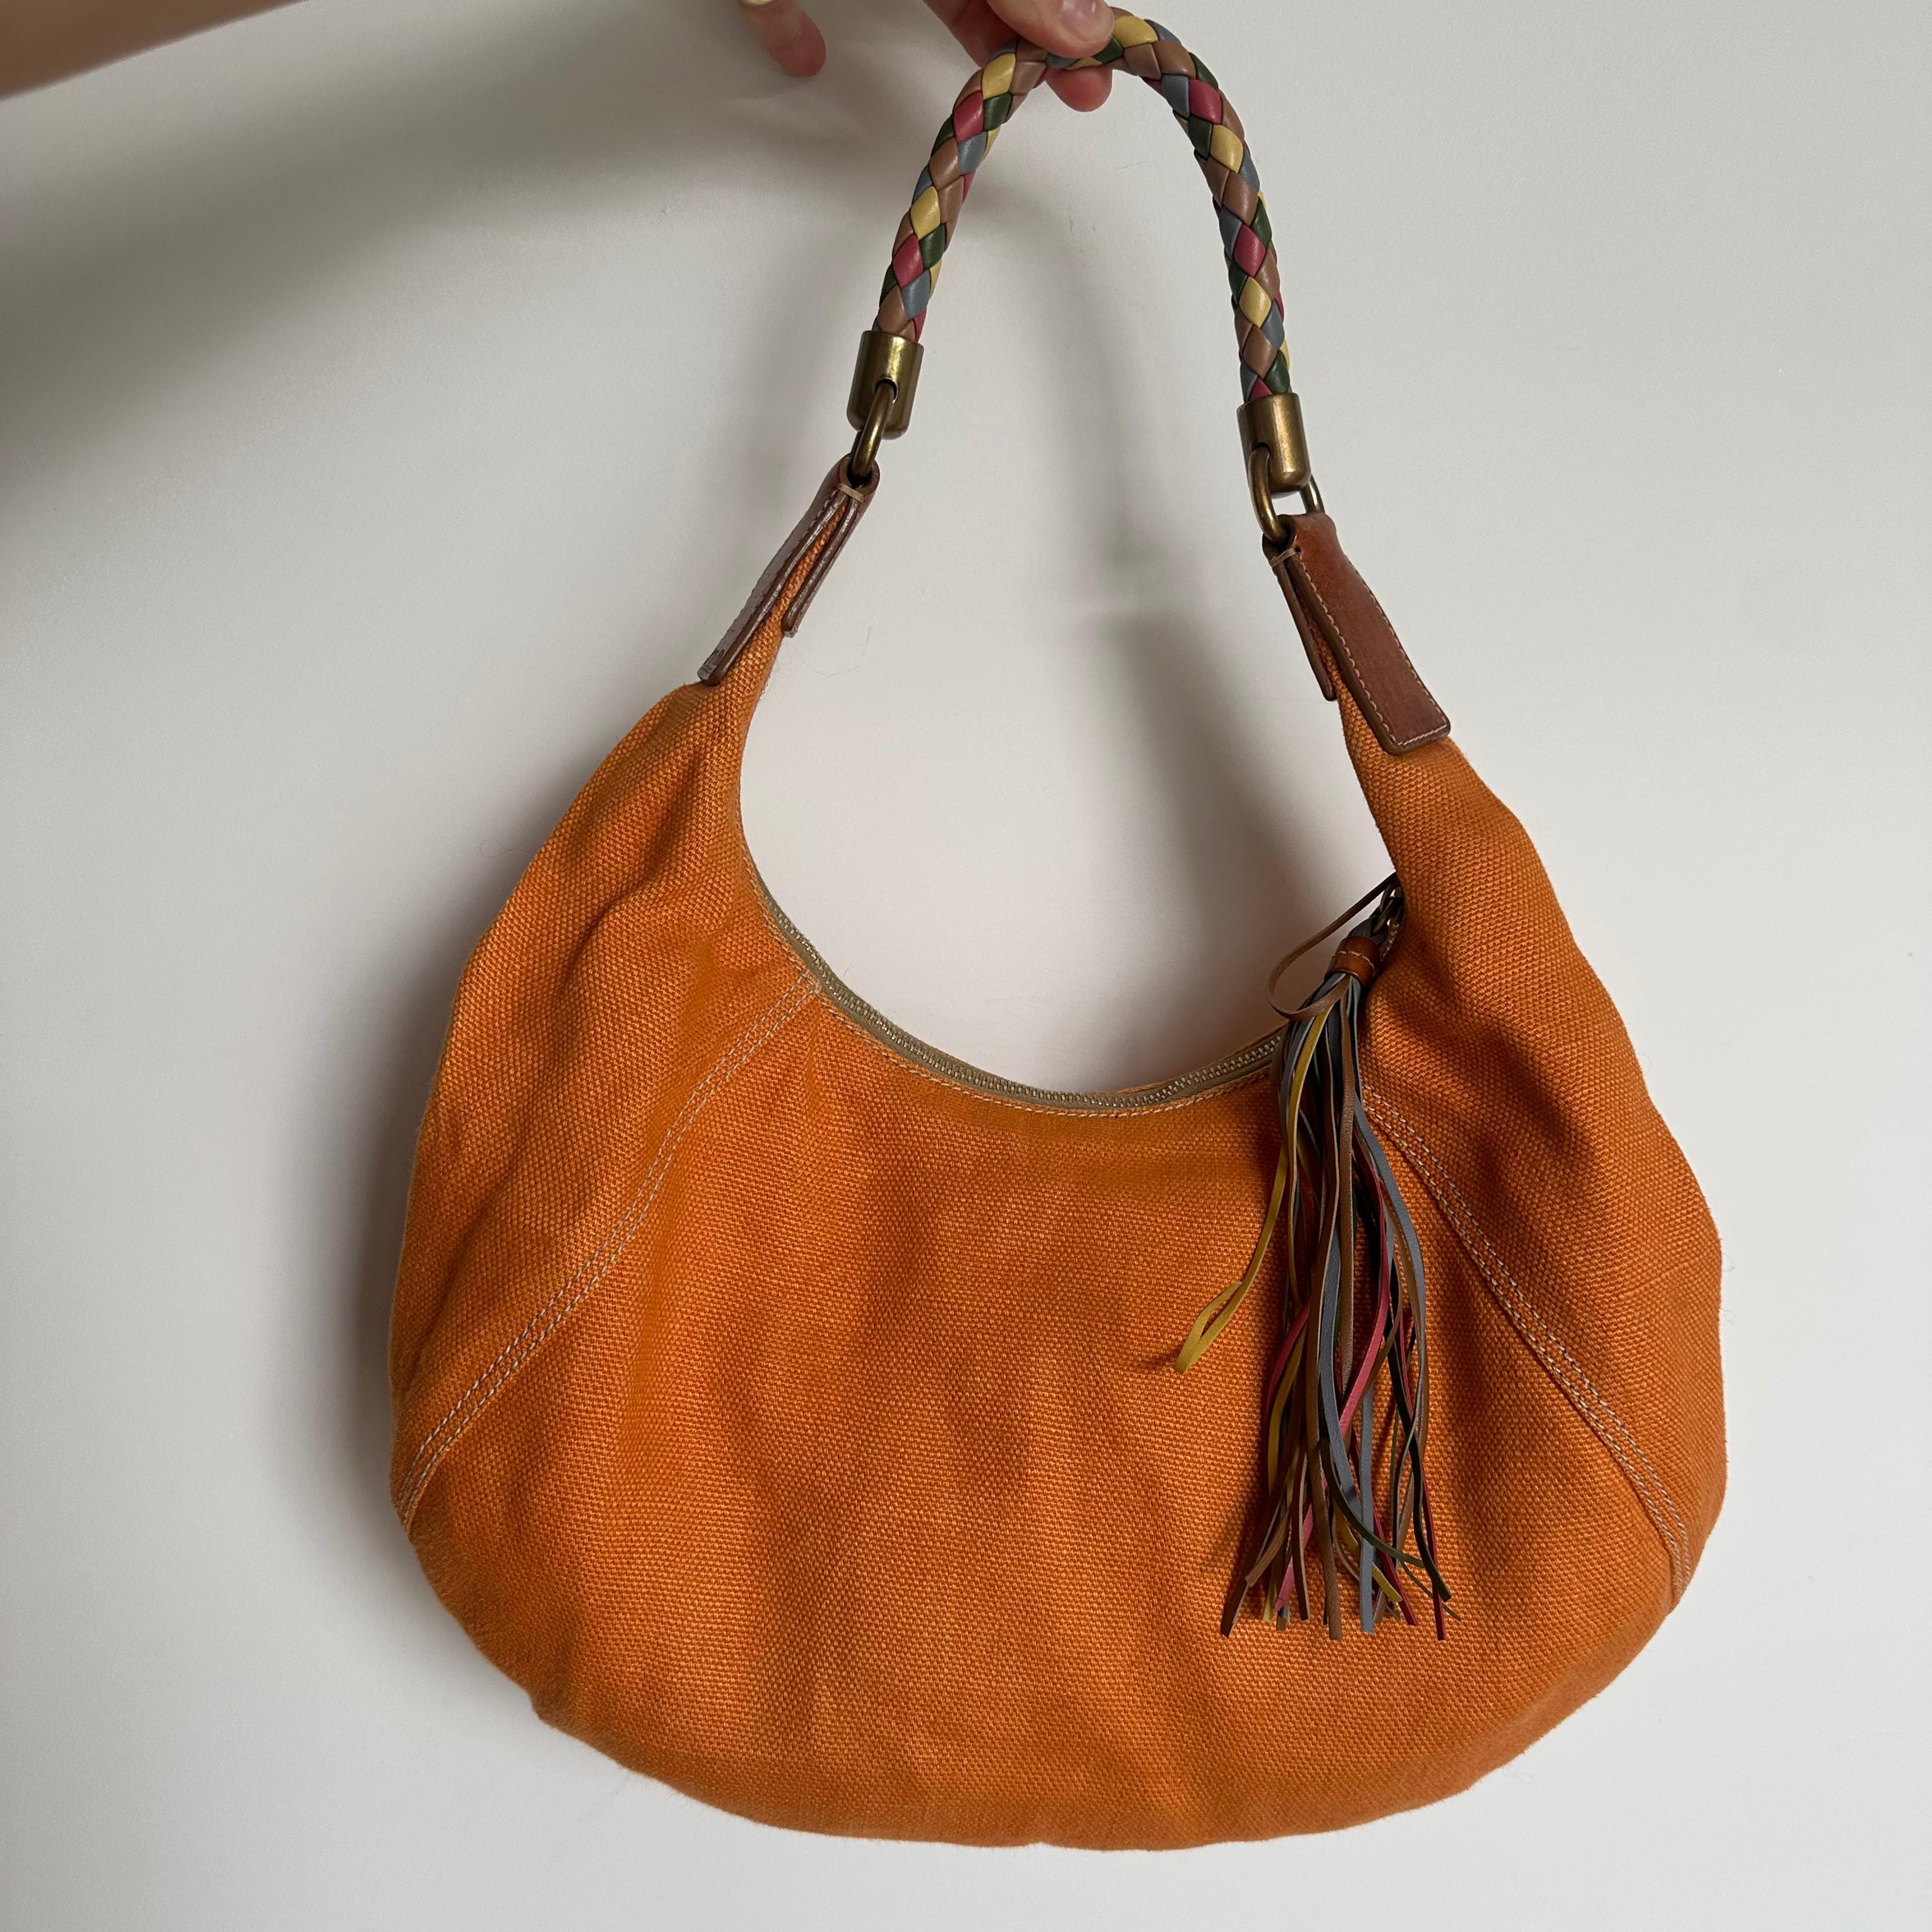 Sold at Auction: Miu Miu Vintage Shoulder Bag